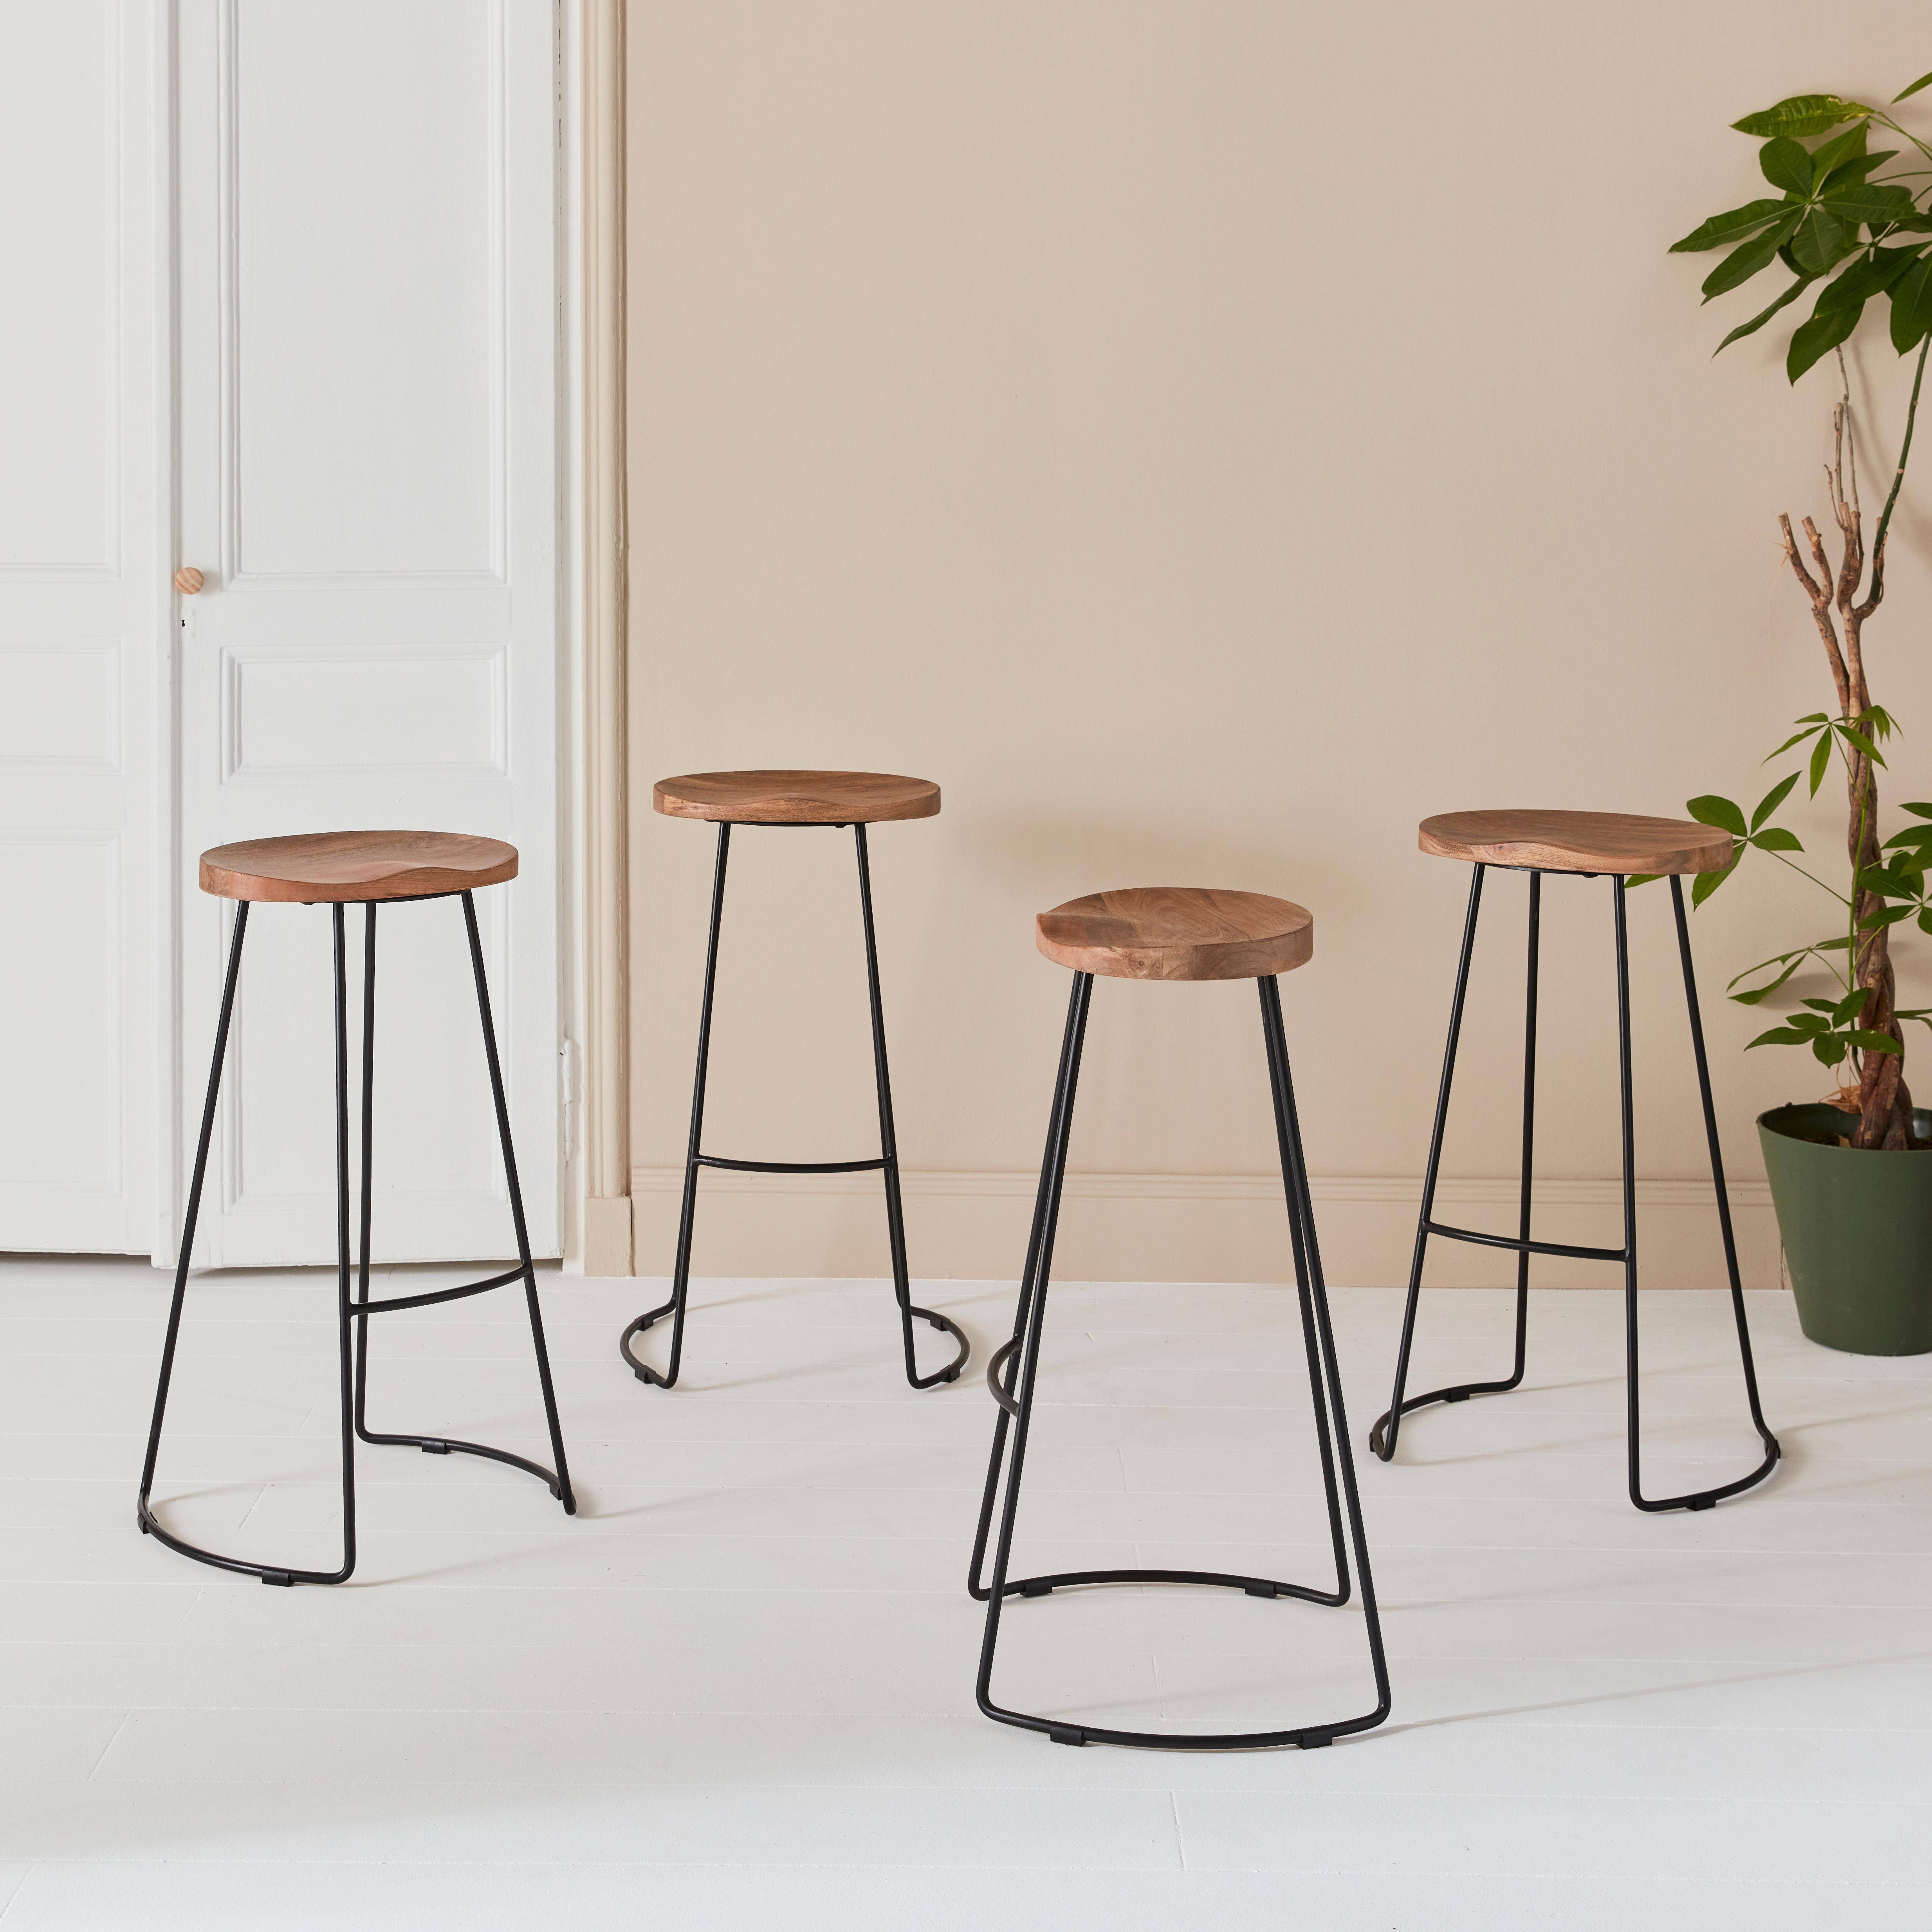 Set of 4 industrial metal and wooden bar stools, 47x40x75cm, Jaya, Mango wood seat, black metal legs,sweeek,Photo2